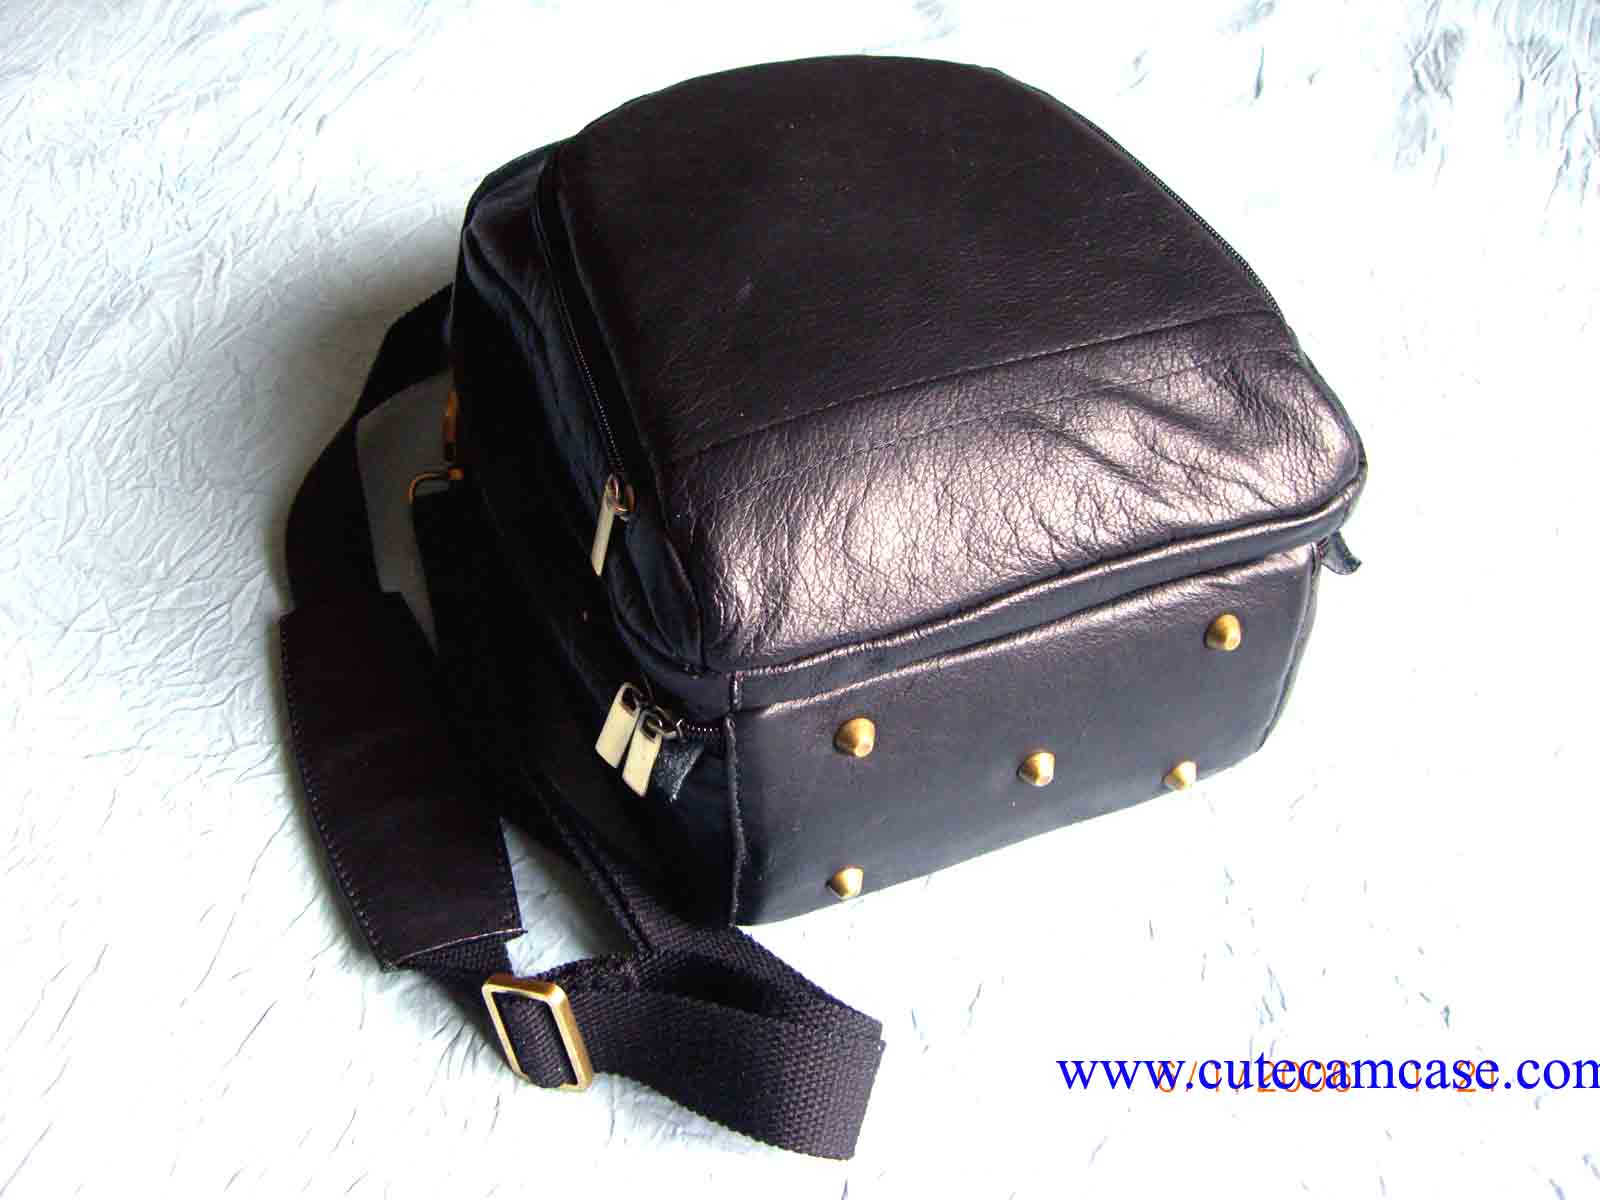 Luxury Leather Case